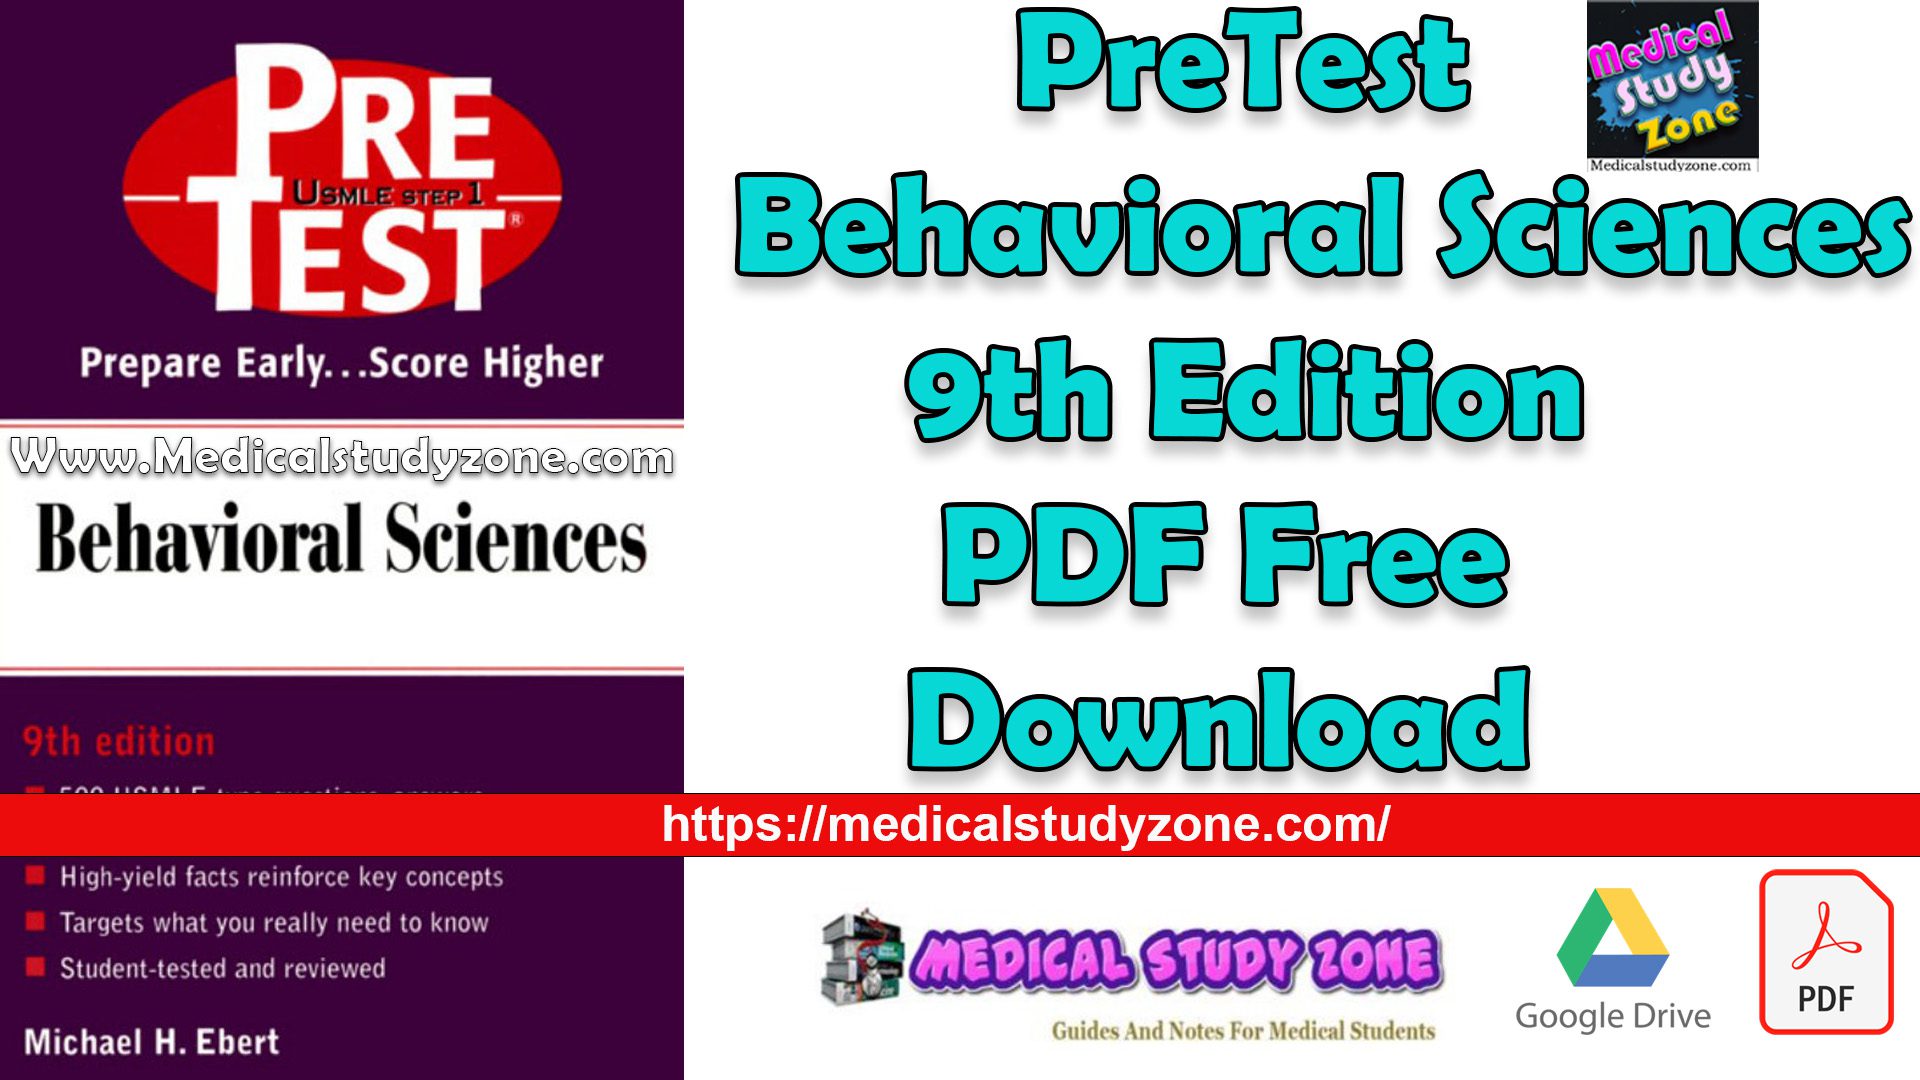 PreTest Behavioral Sciences 9th Edition PDF Free Download